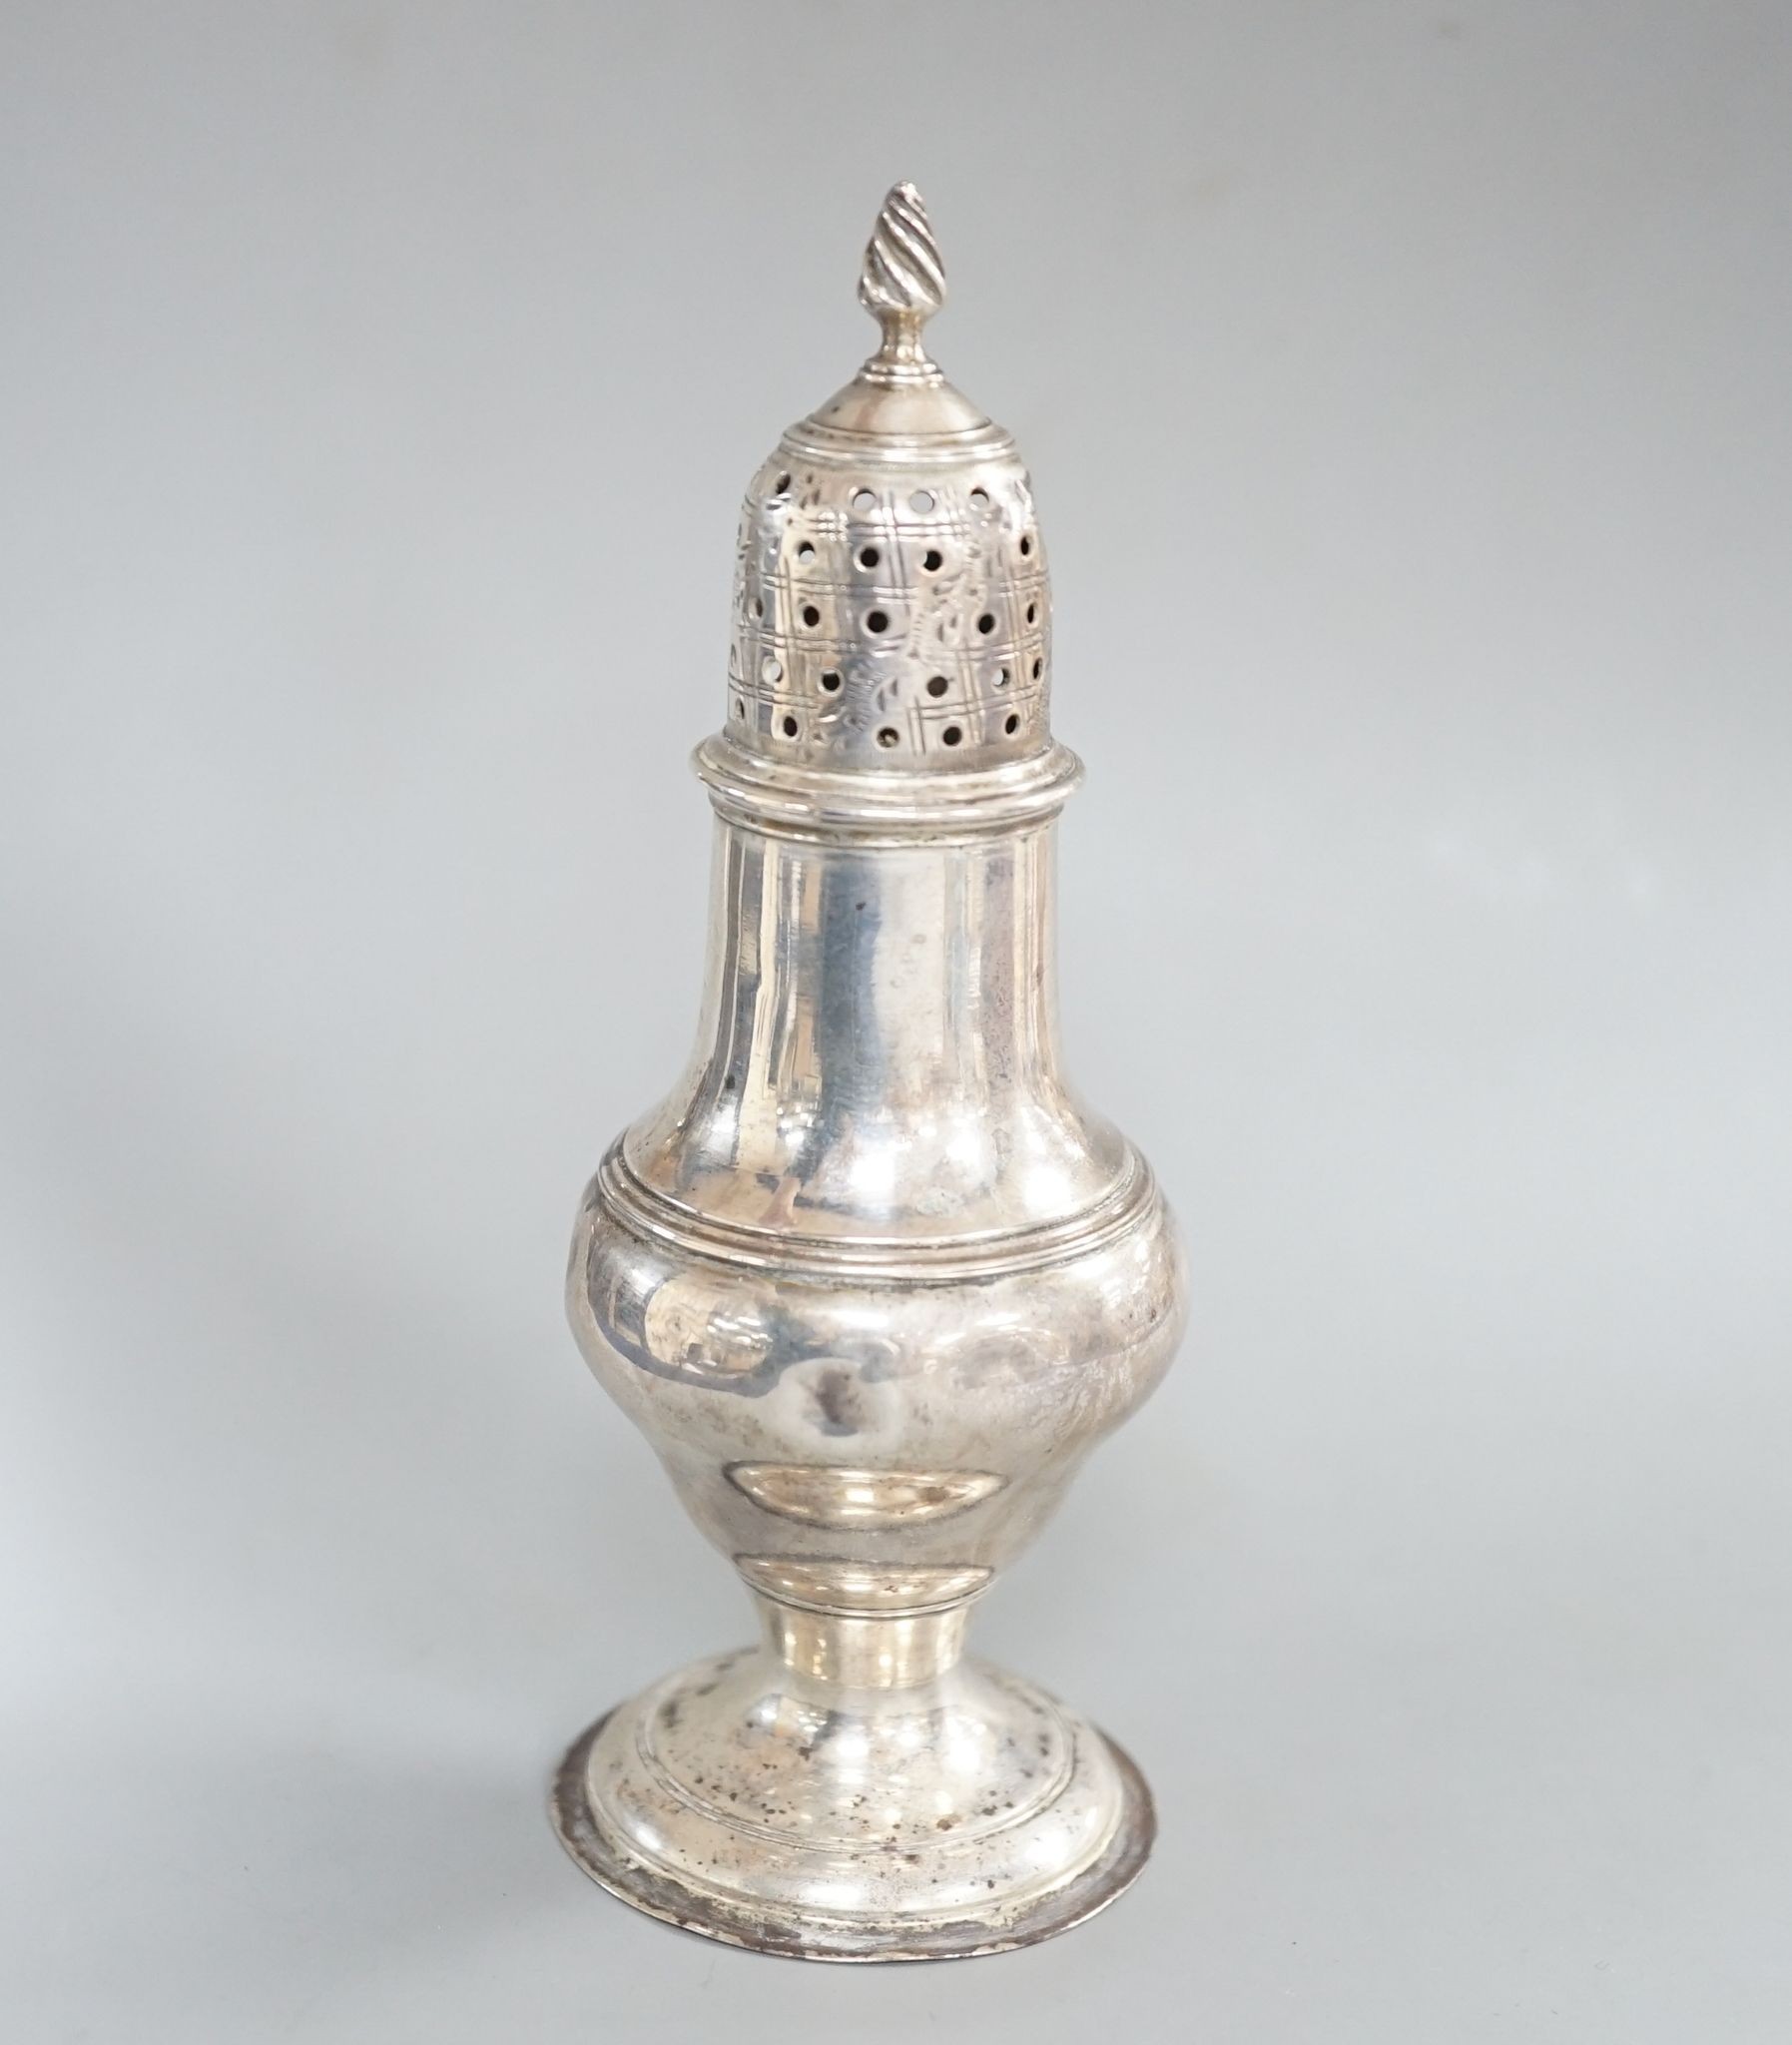 A George III silver baluster pepperette, Thomas Daniell, London, 1783, 13.2cm, 74 grams.